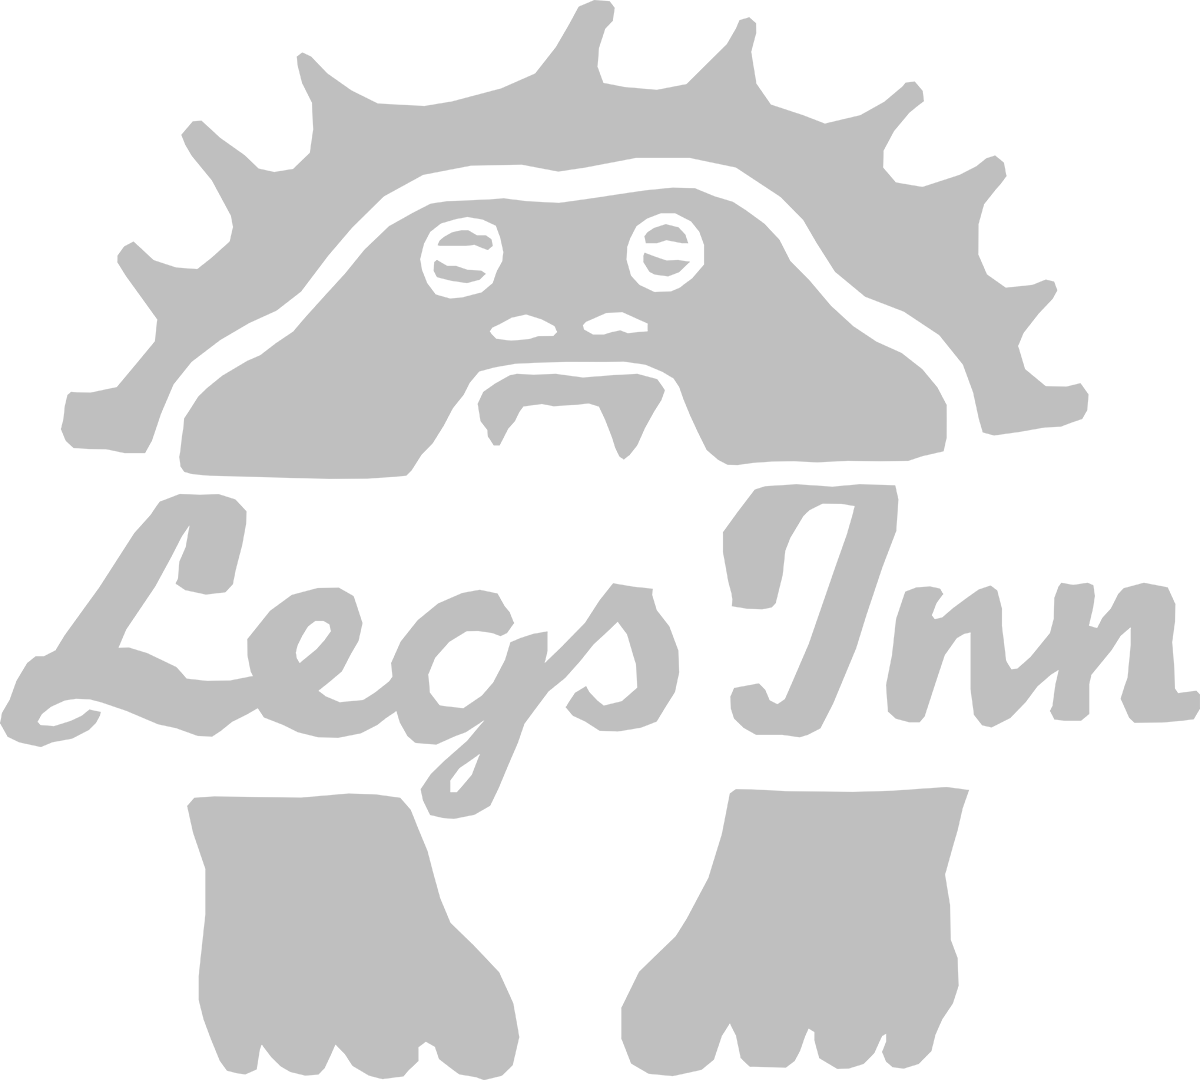 Legs Inn